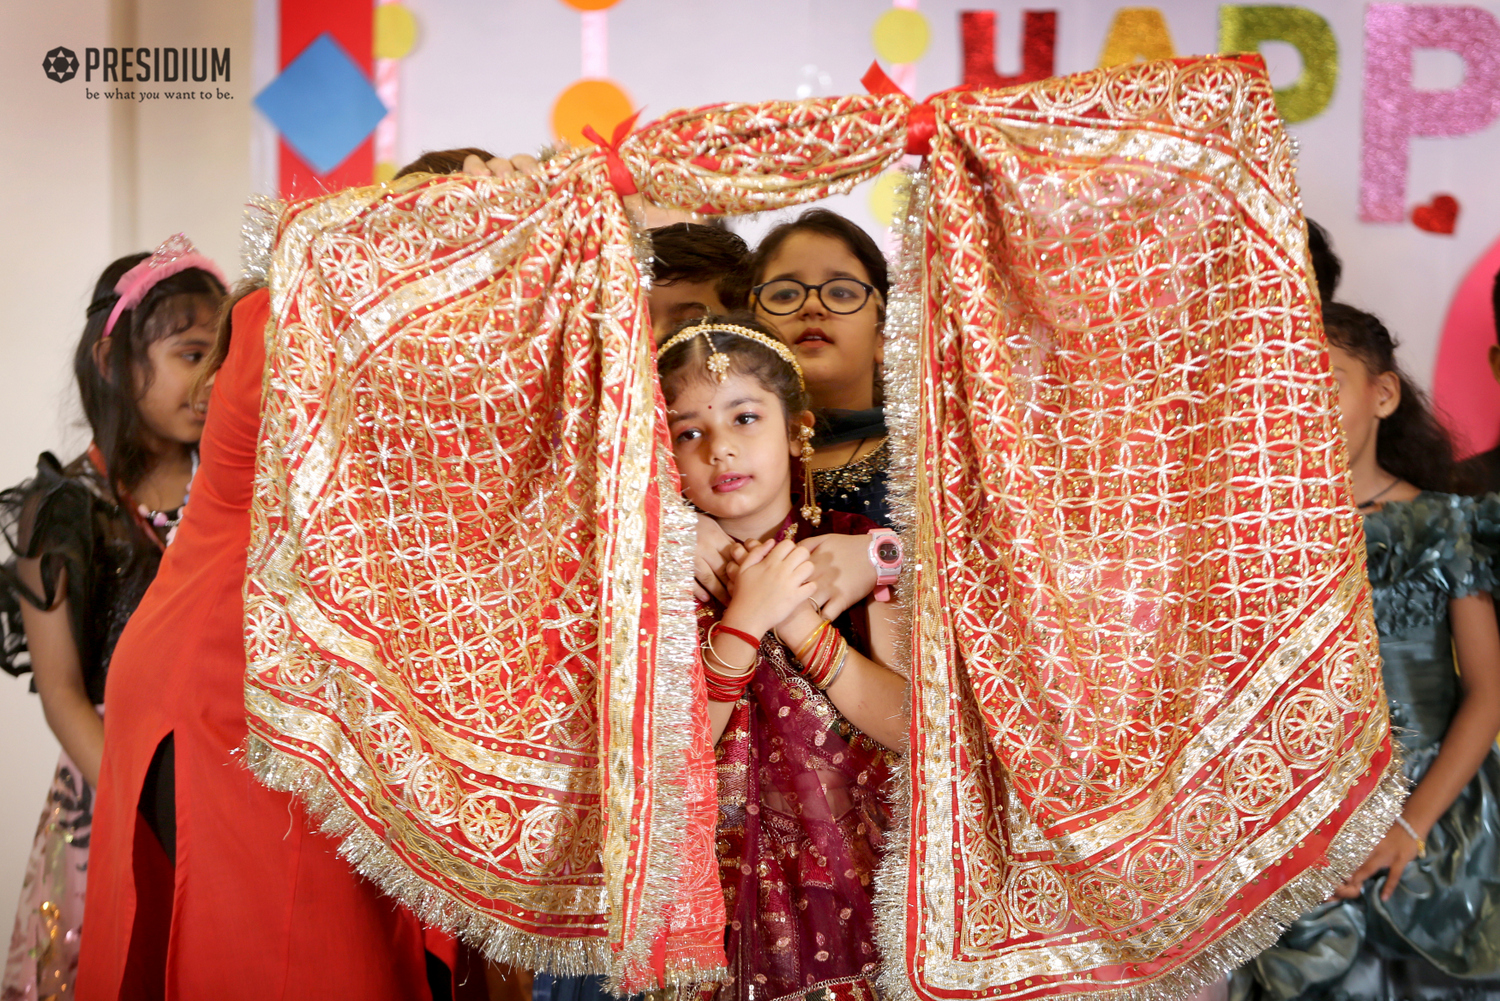 Presidium Punjabi Bagh, PRESIDIUM'S TRIBUTE TO DAUGHTERS: A JOURNEY OF LOVE AND APPRECIATION